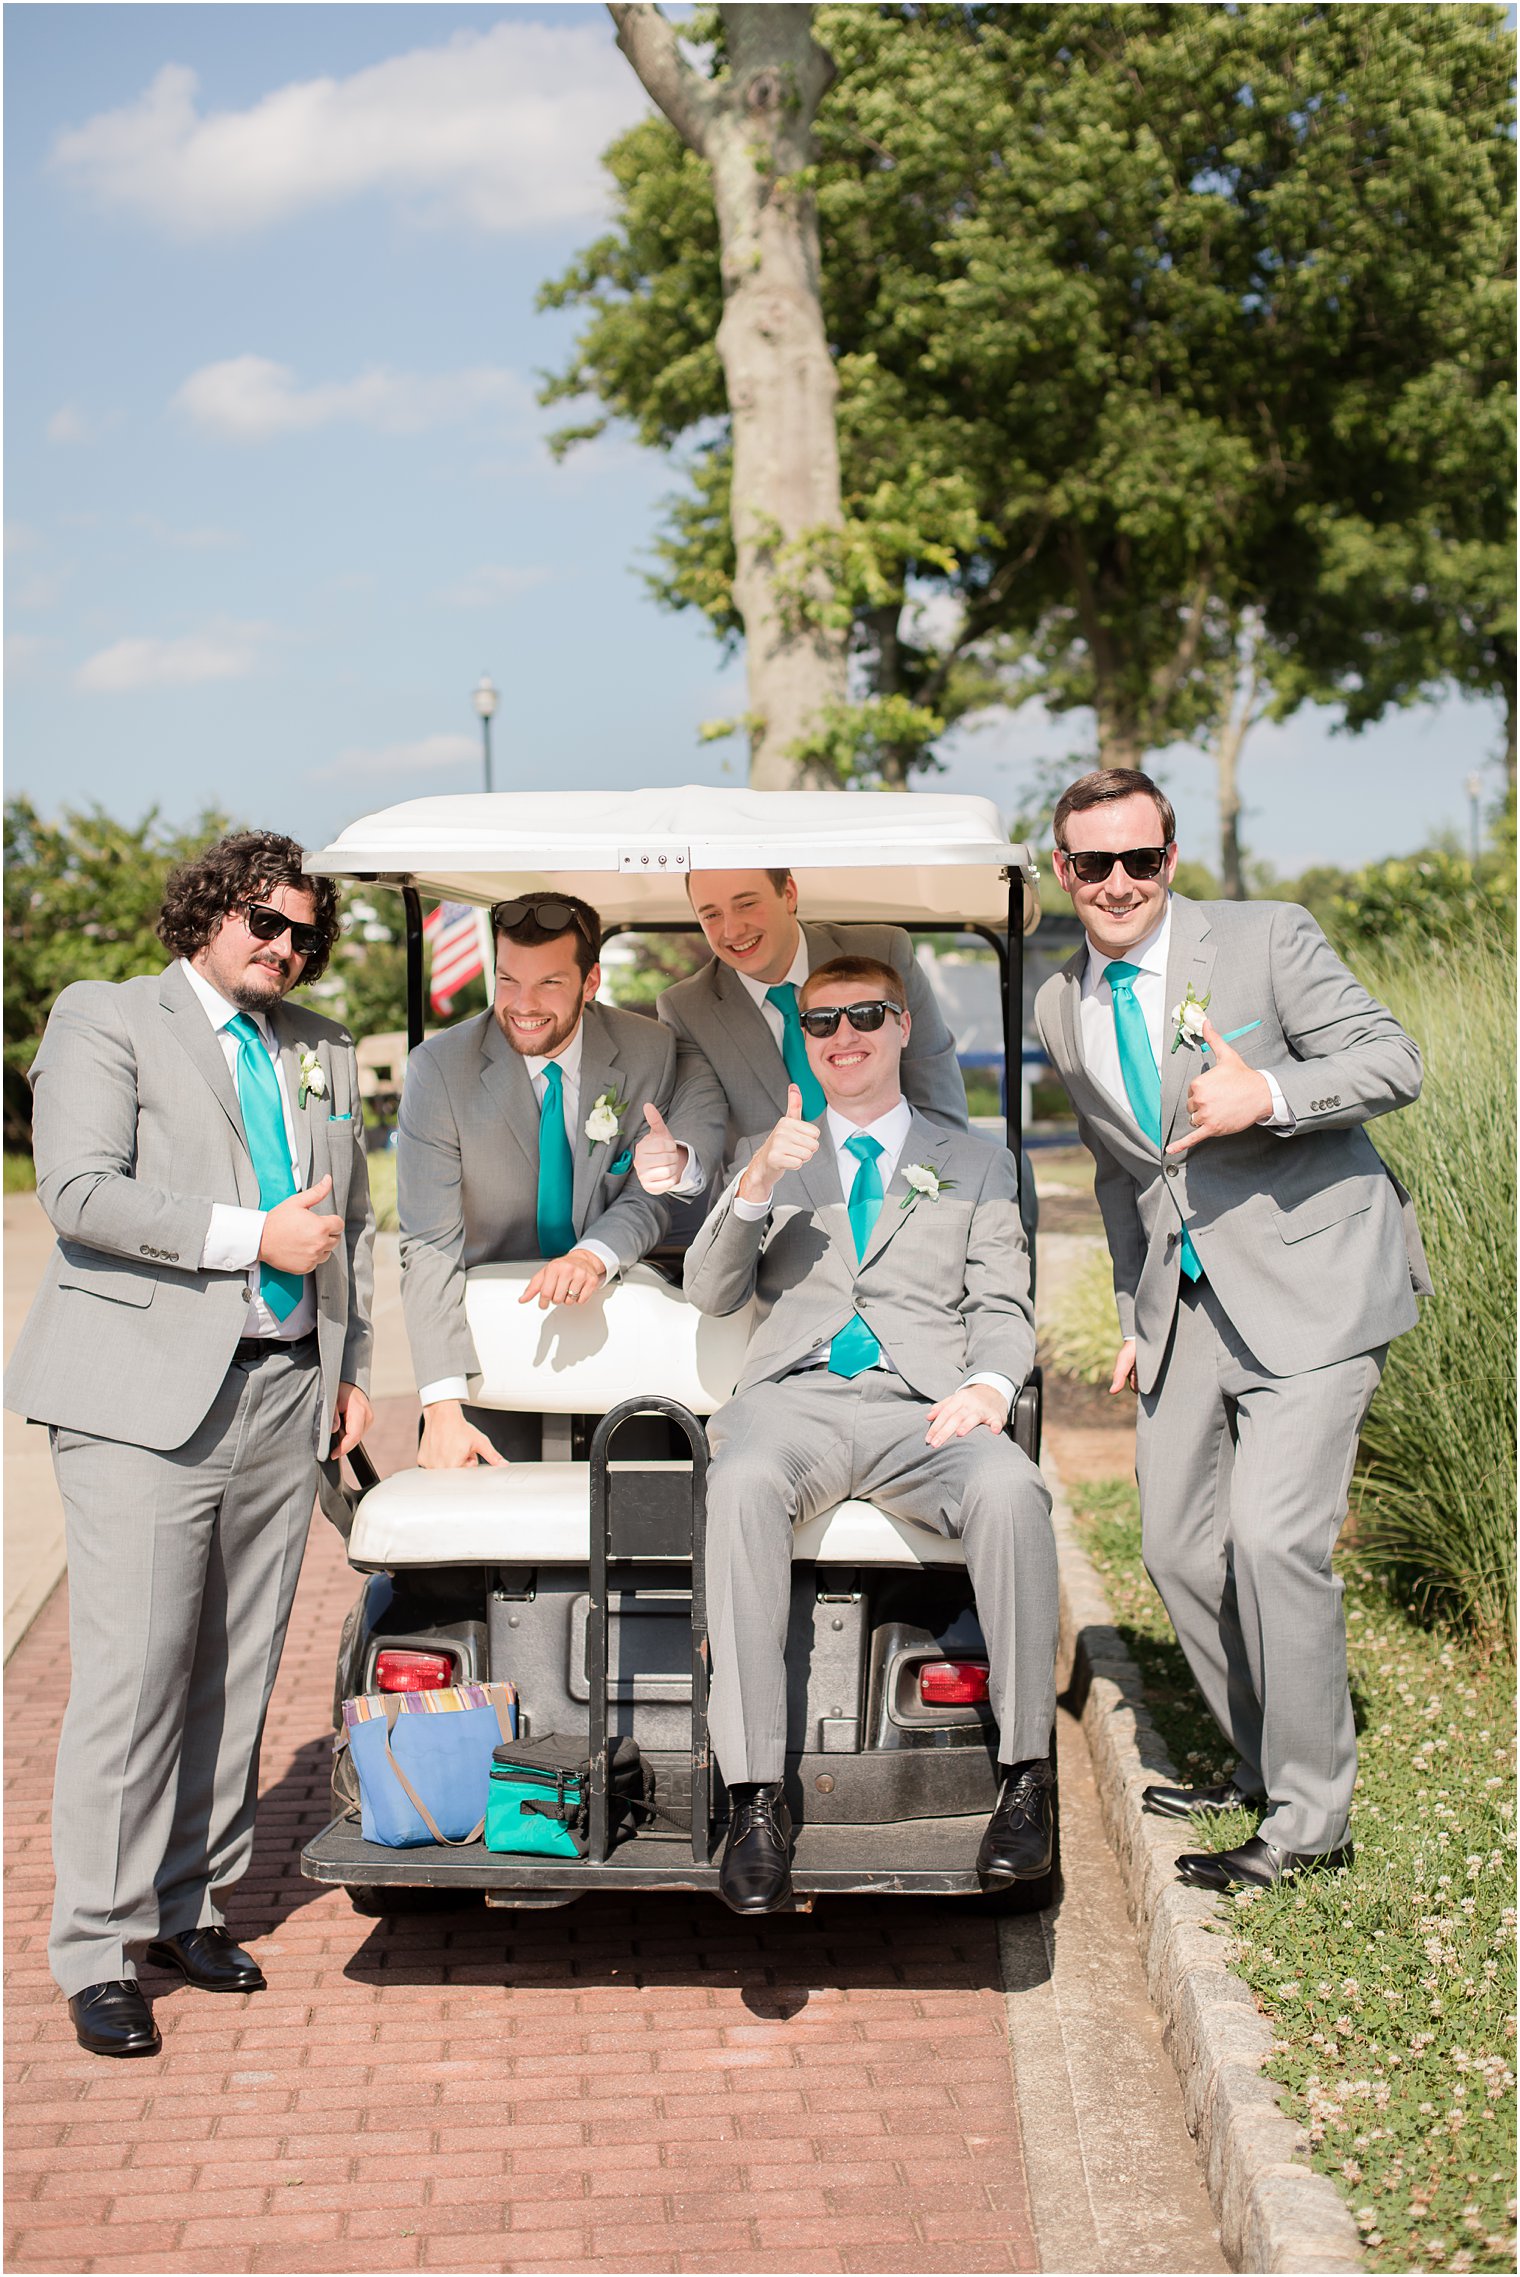 Groomsmen waiting on golf cart